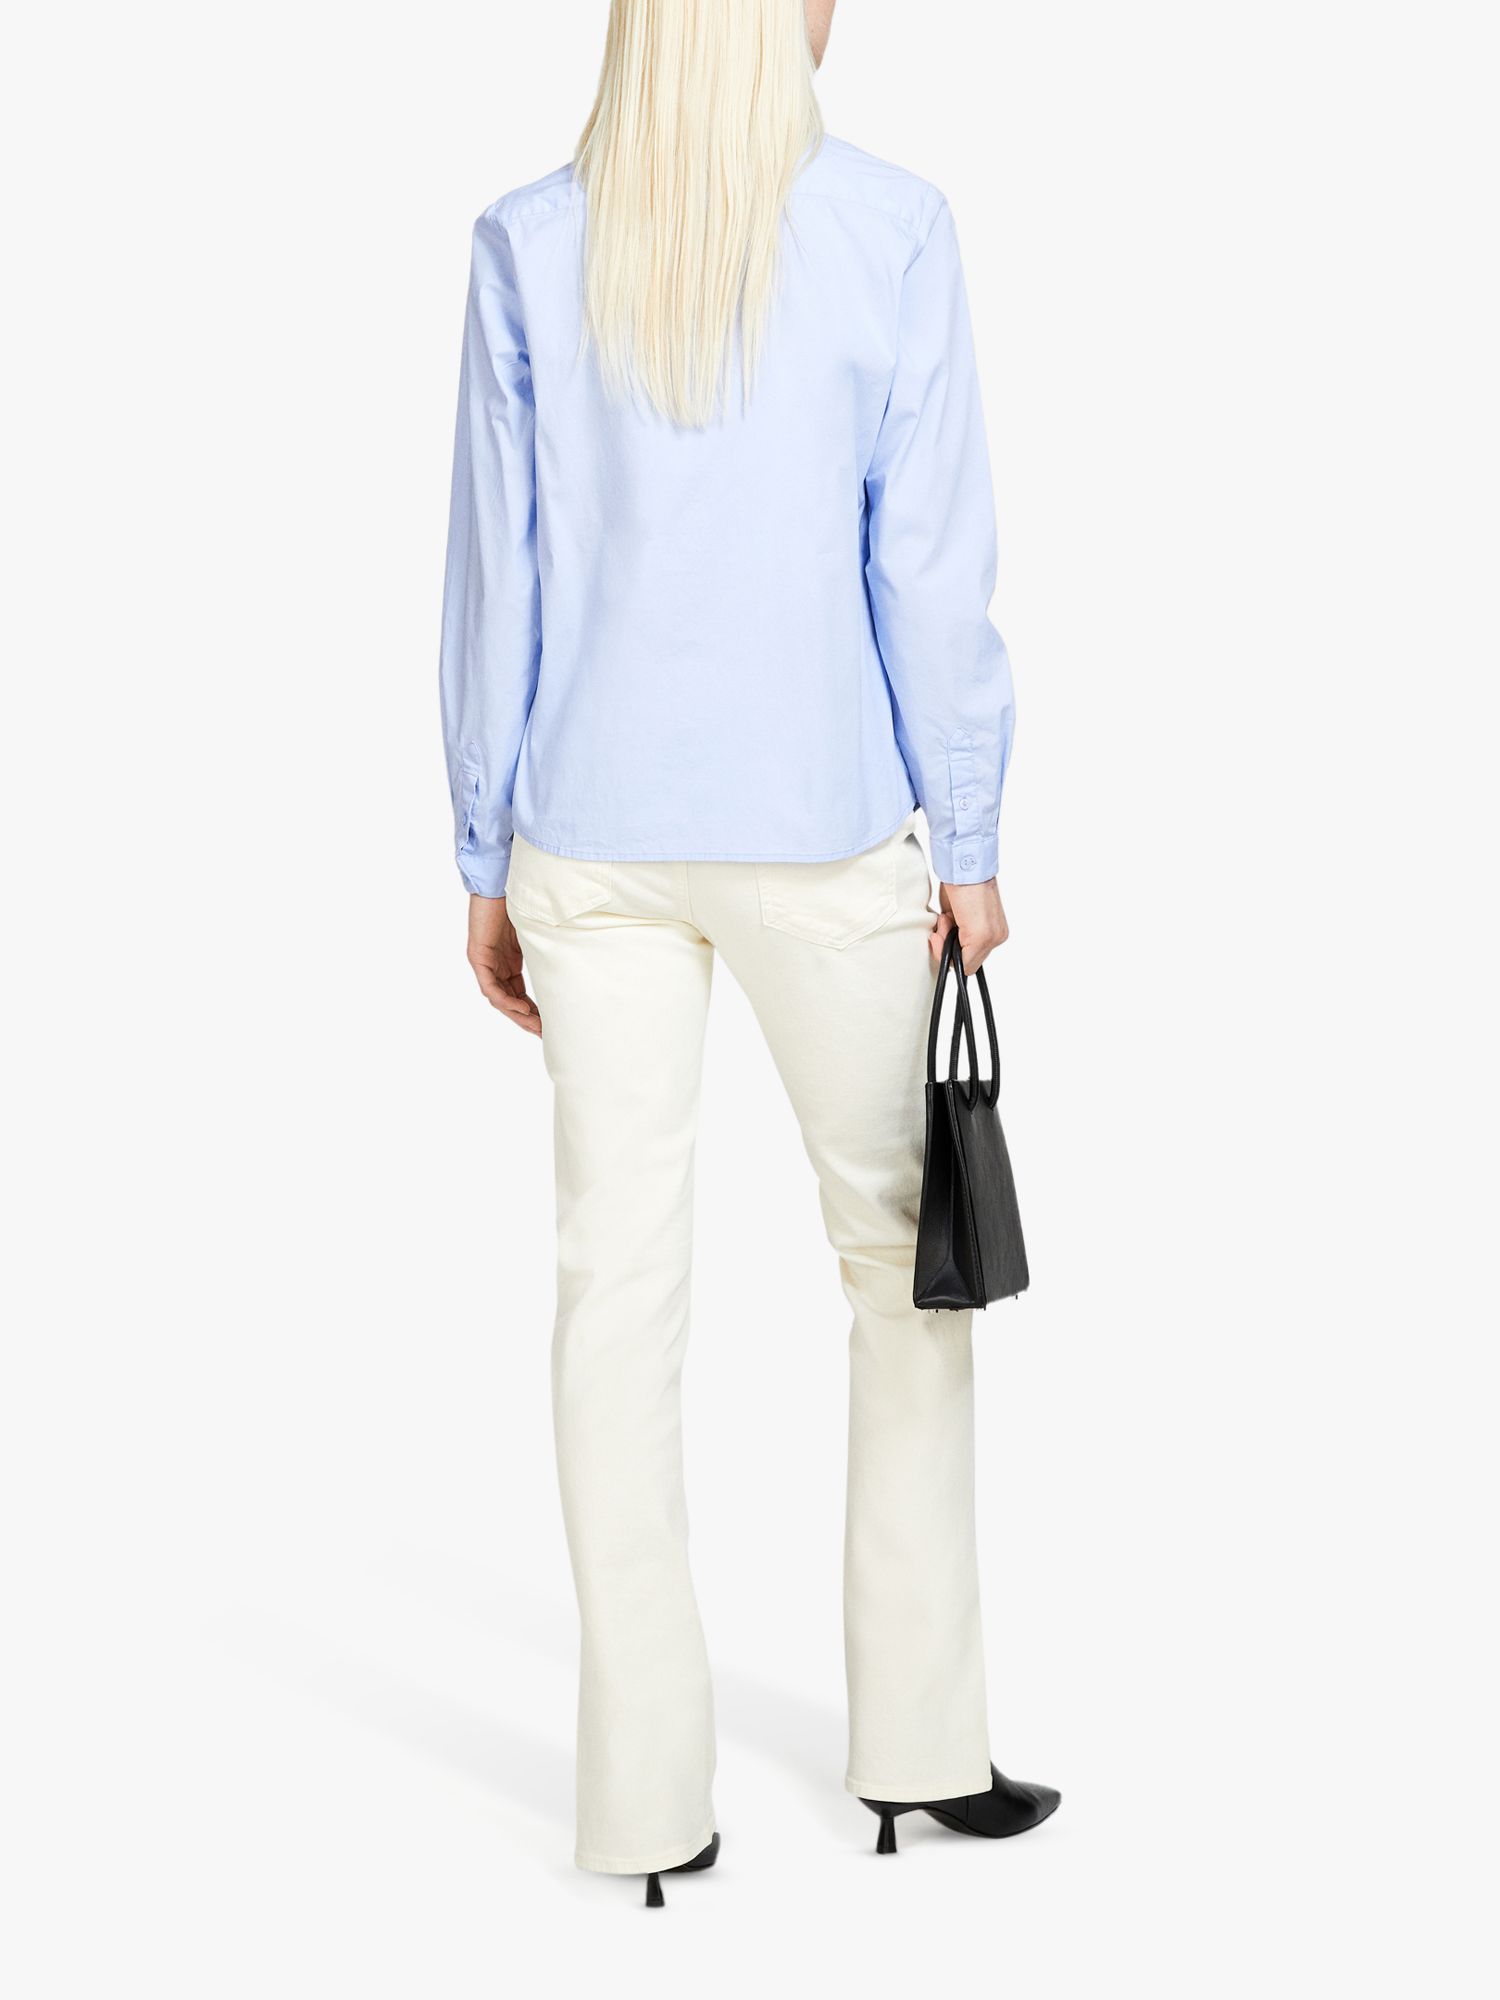 Buy SISLEY Regular Fit Poplin Shirt, Blue Online at johnlewis.com